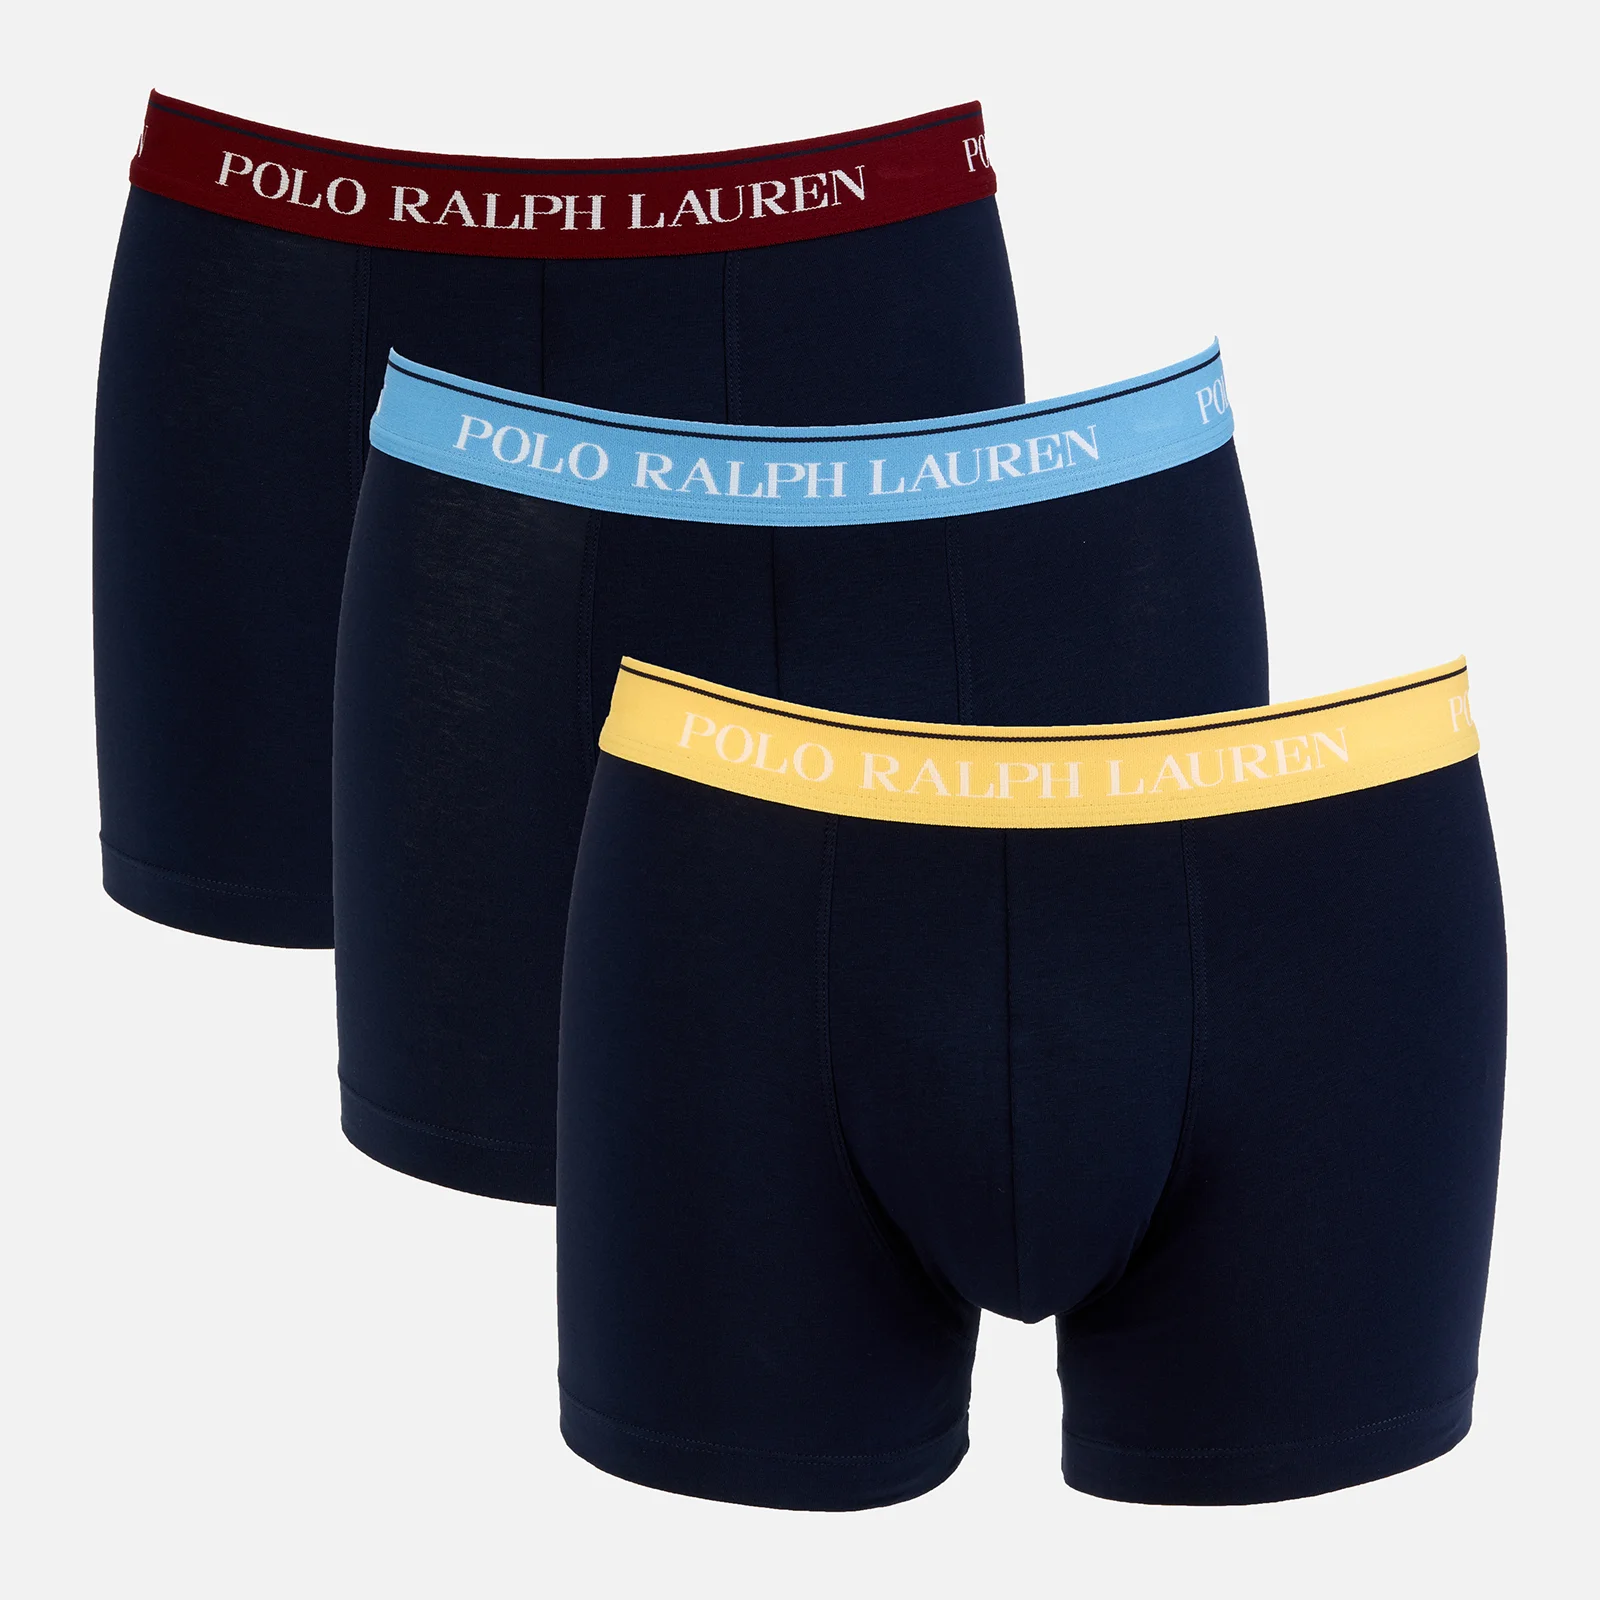 Polo Ralph Lauren Men's 3-Pack Contrast Waistband Boxer Shorts - Wine/Sky/Yellow Image 1